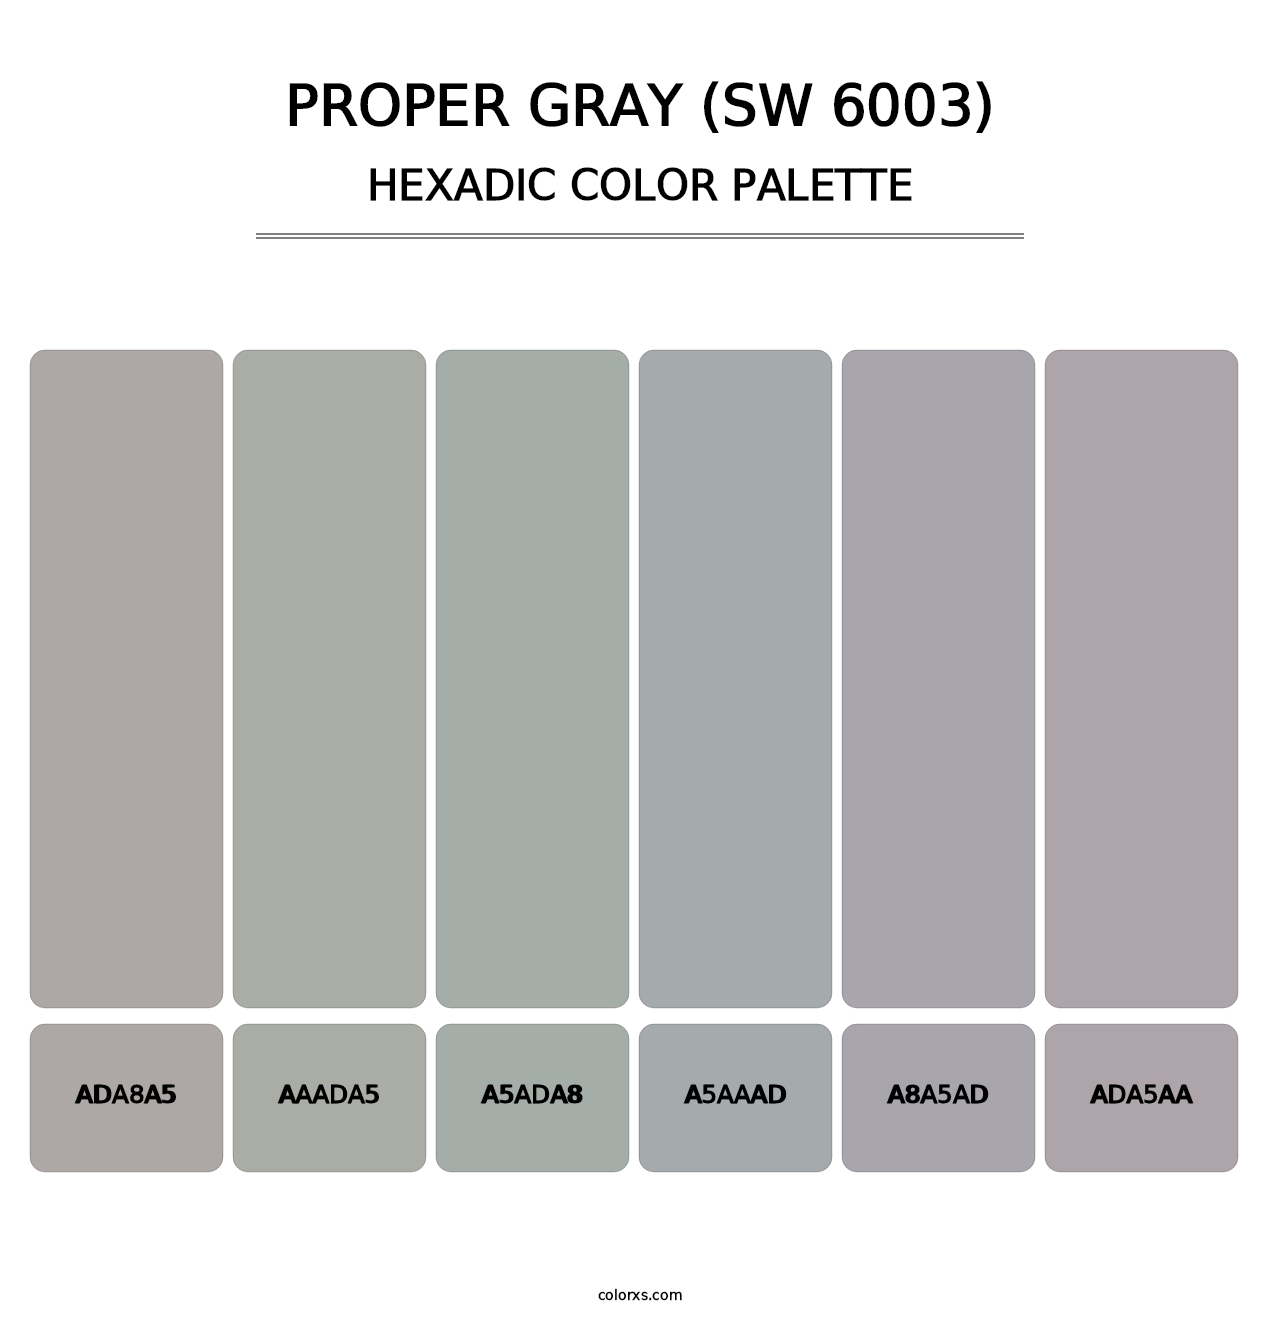 Proper Gray (SW 6003) - Hexadic Color Palette